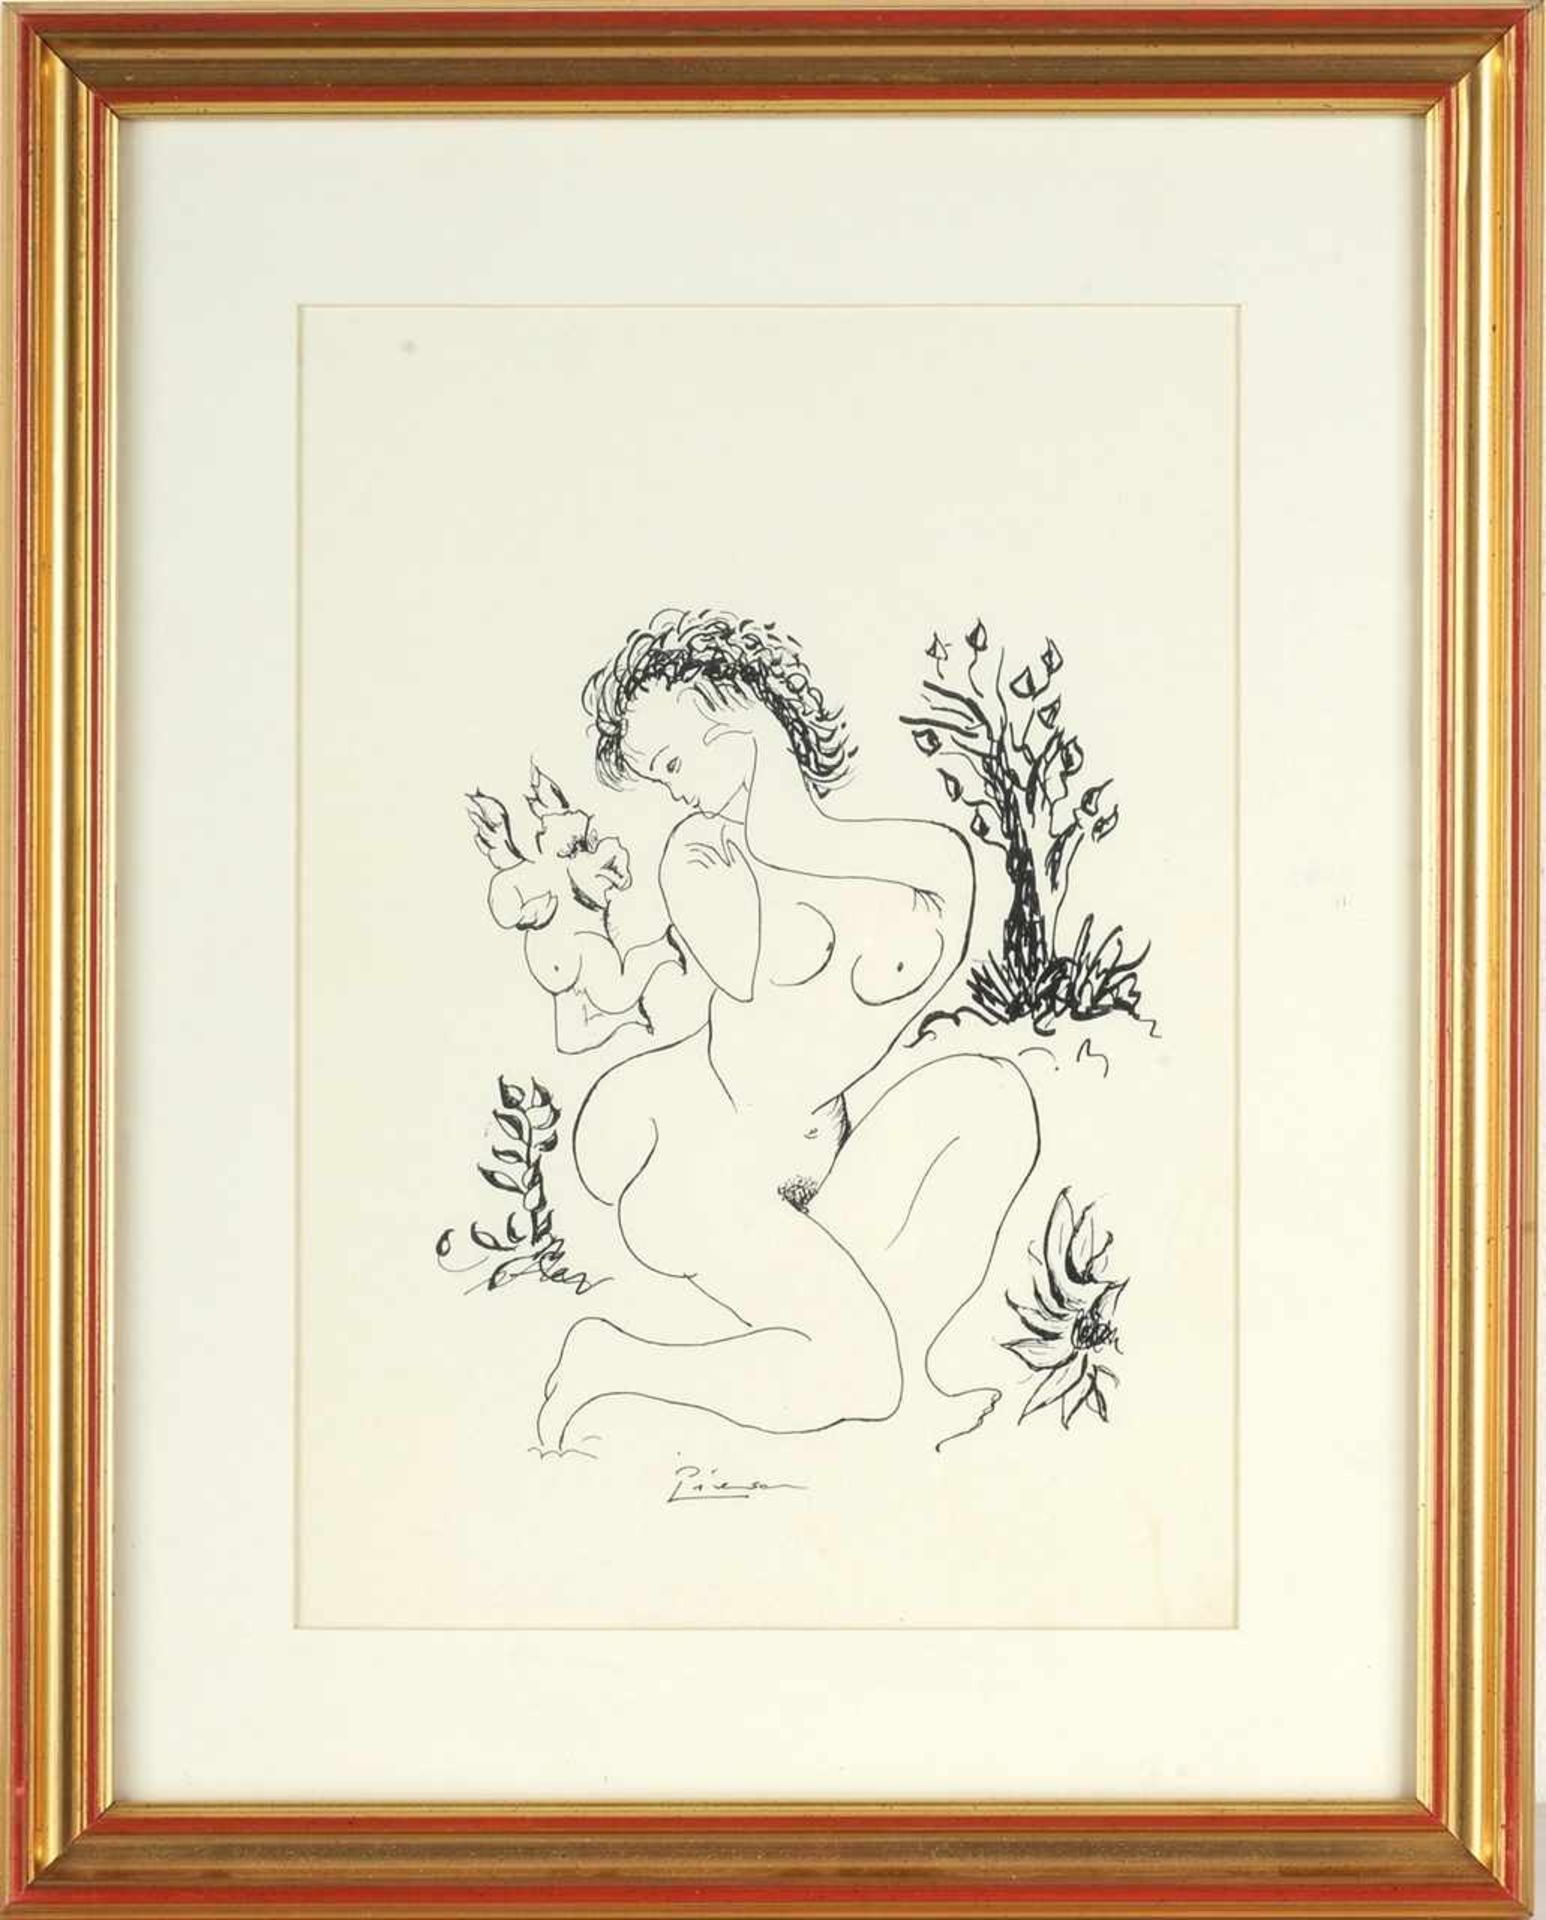 Picasso, Pablo (1881 Málaga - 1973 Mougins) Lithographie. Faksimile. "Blumenmädchen". In der